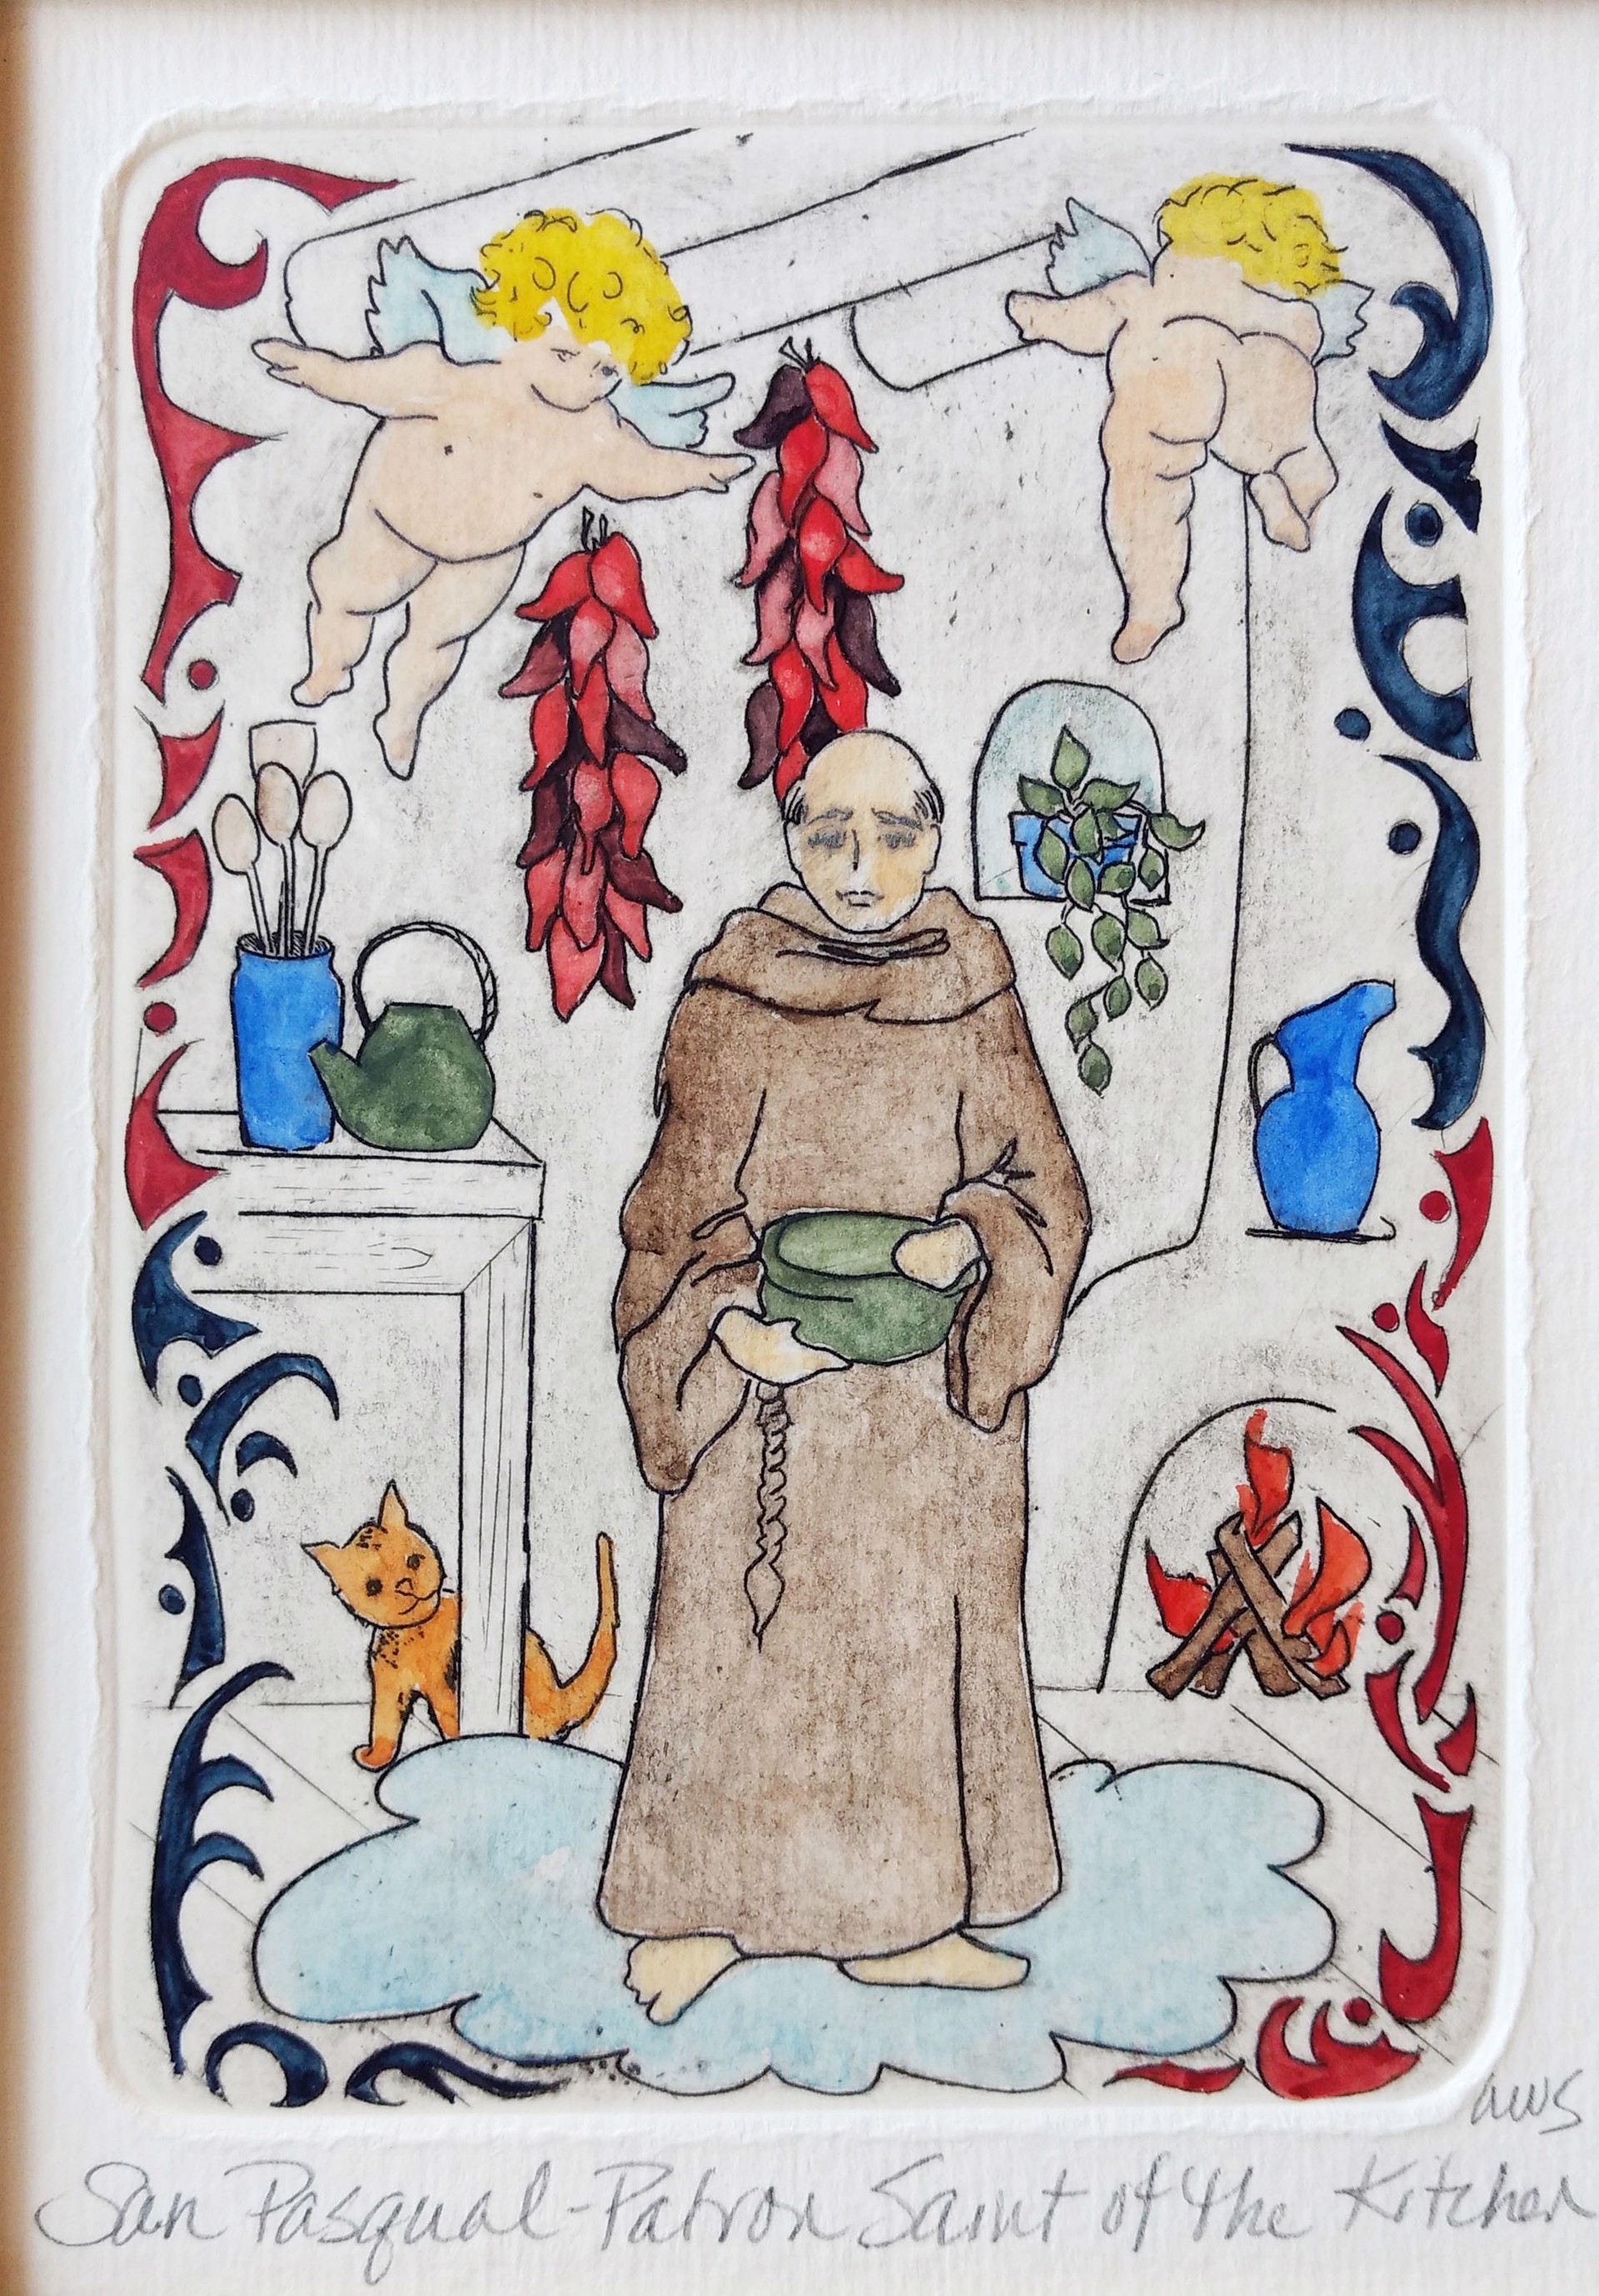 San Pasqual, Patron Saint of the Kitchen (framed) by Anne Sawyer